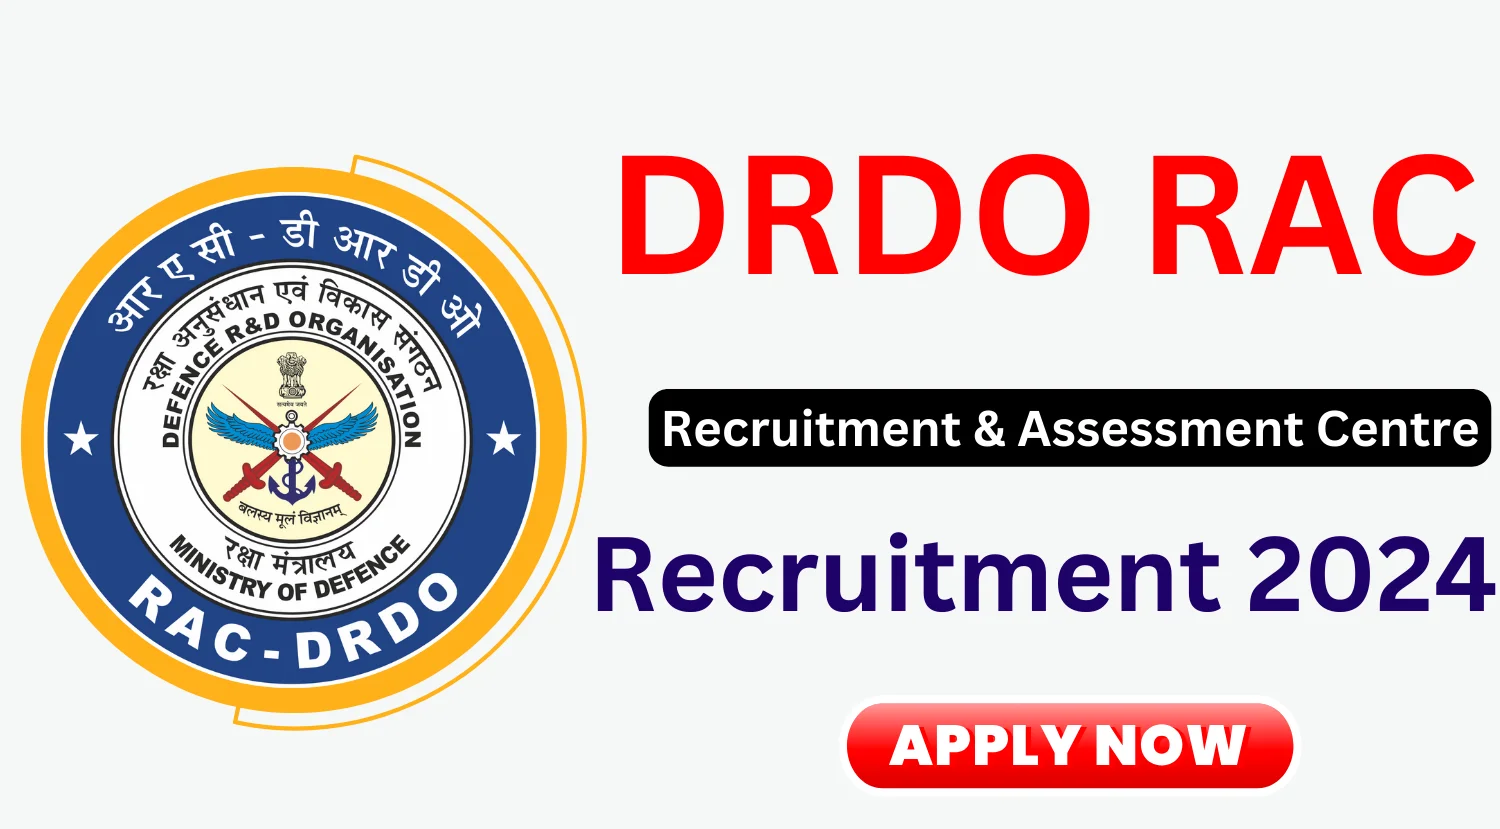 DRDO RAC Recruitment 2024